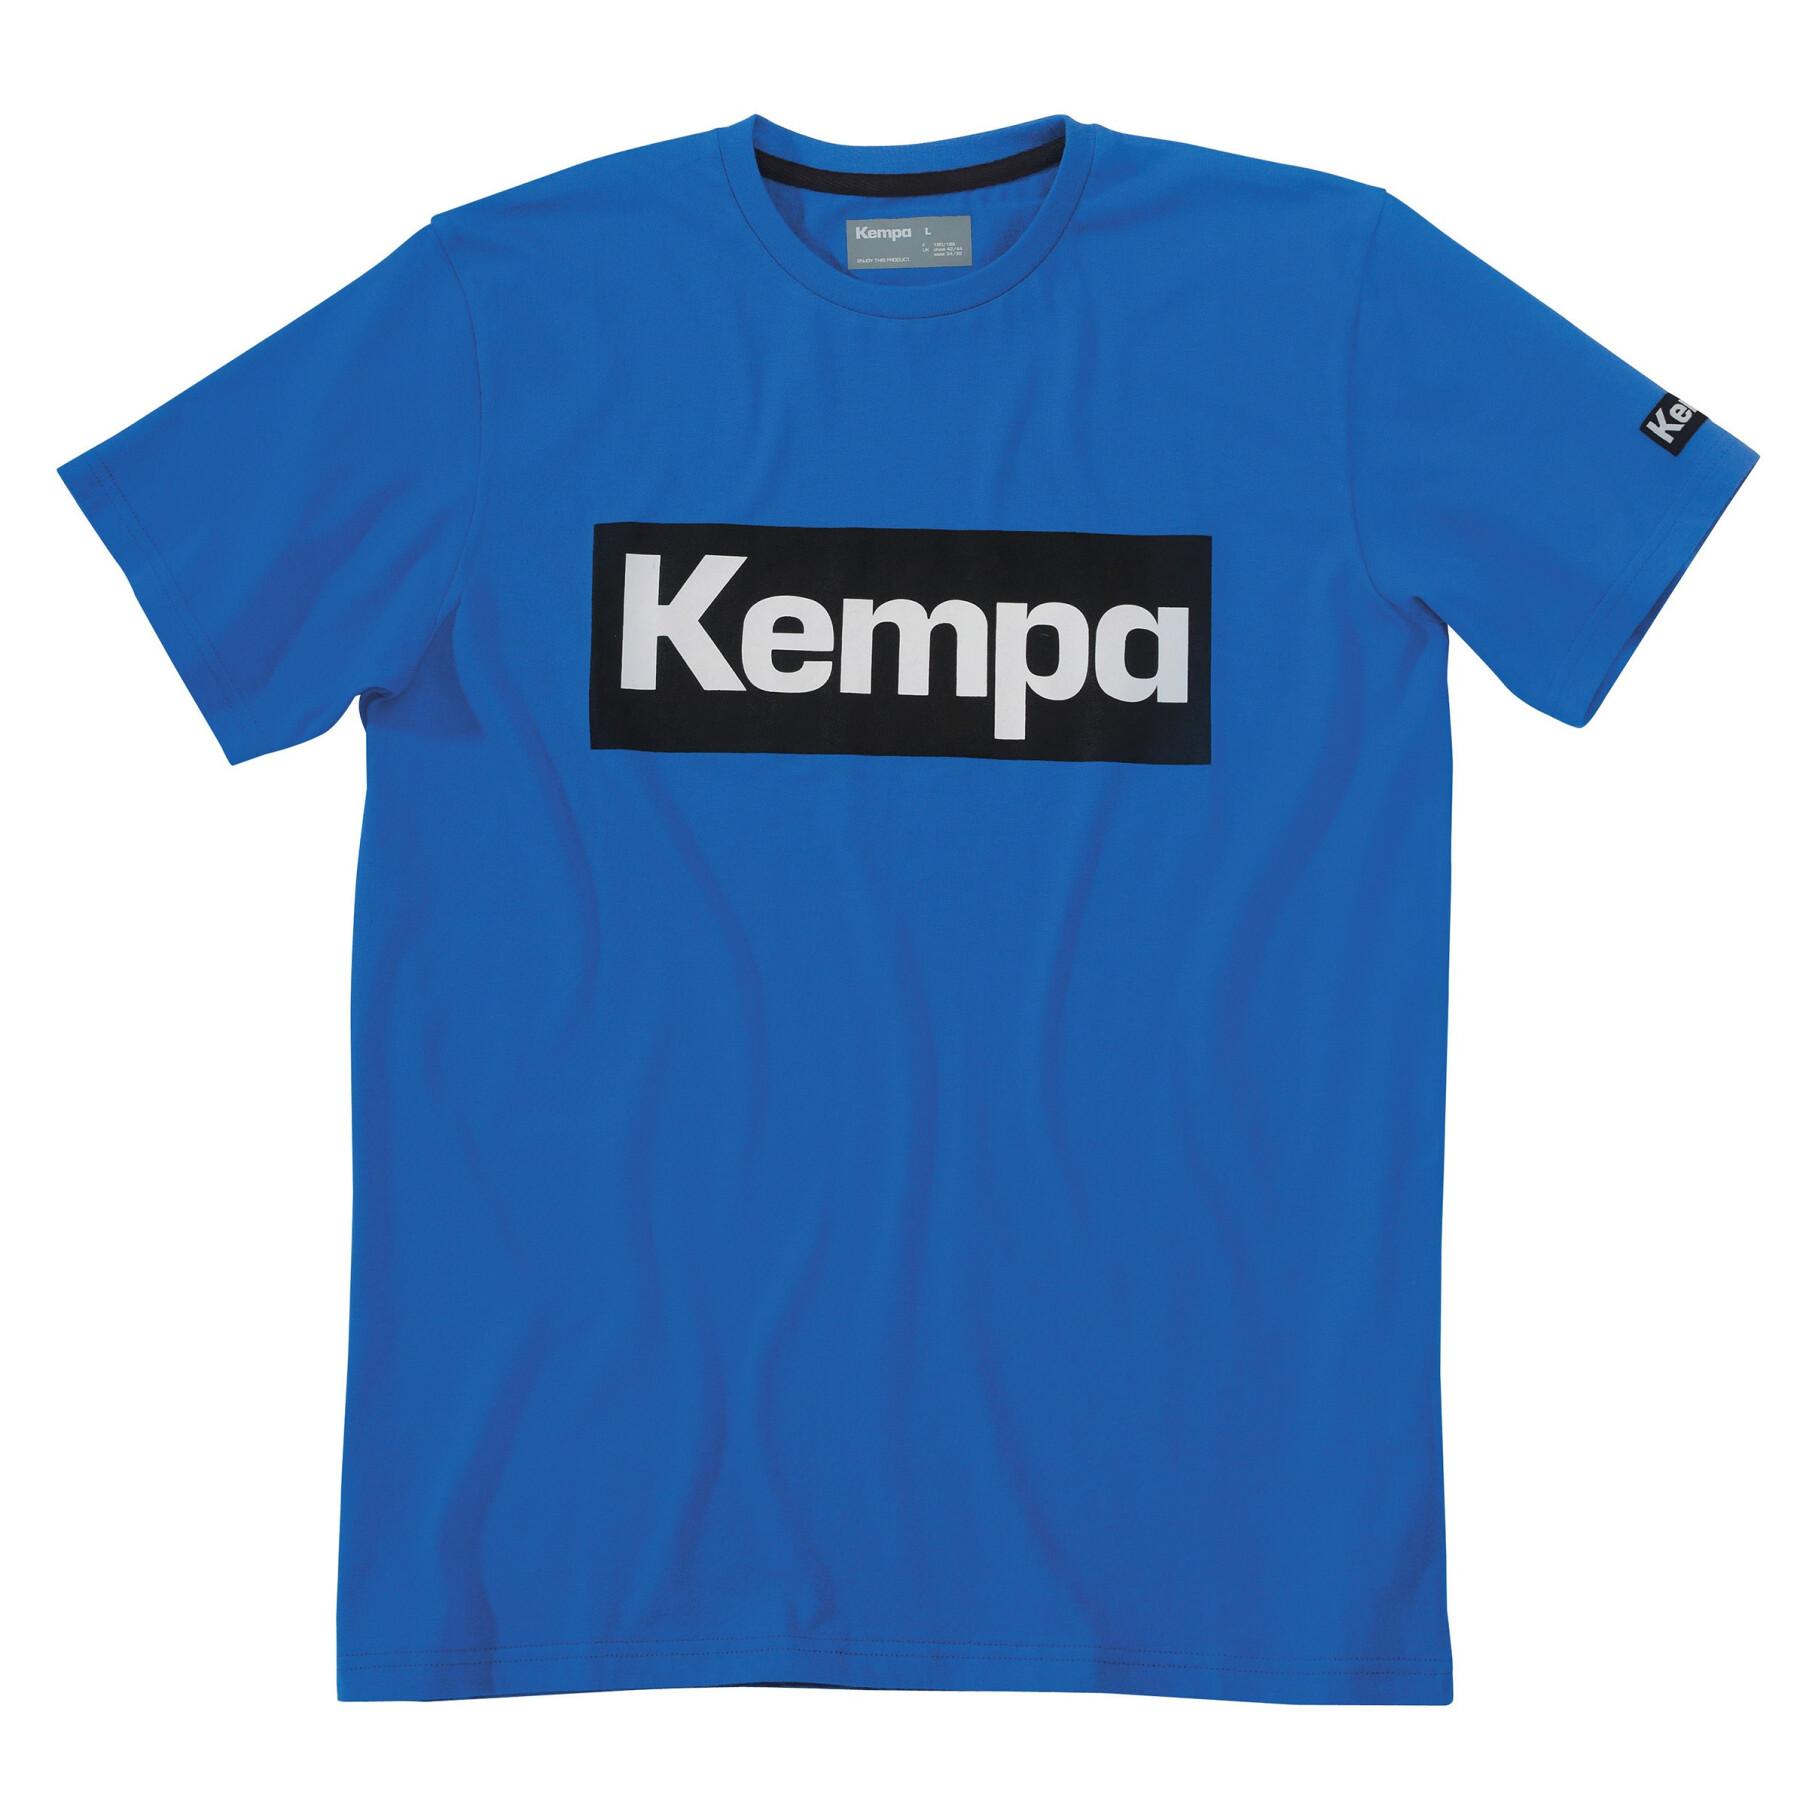 Camiseta Kempa Promo